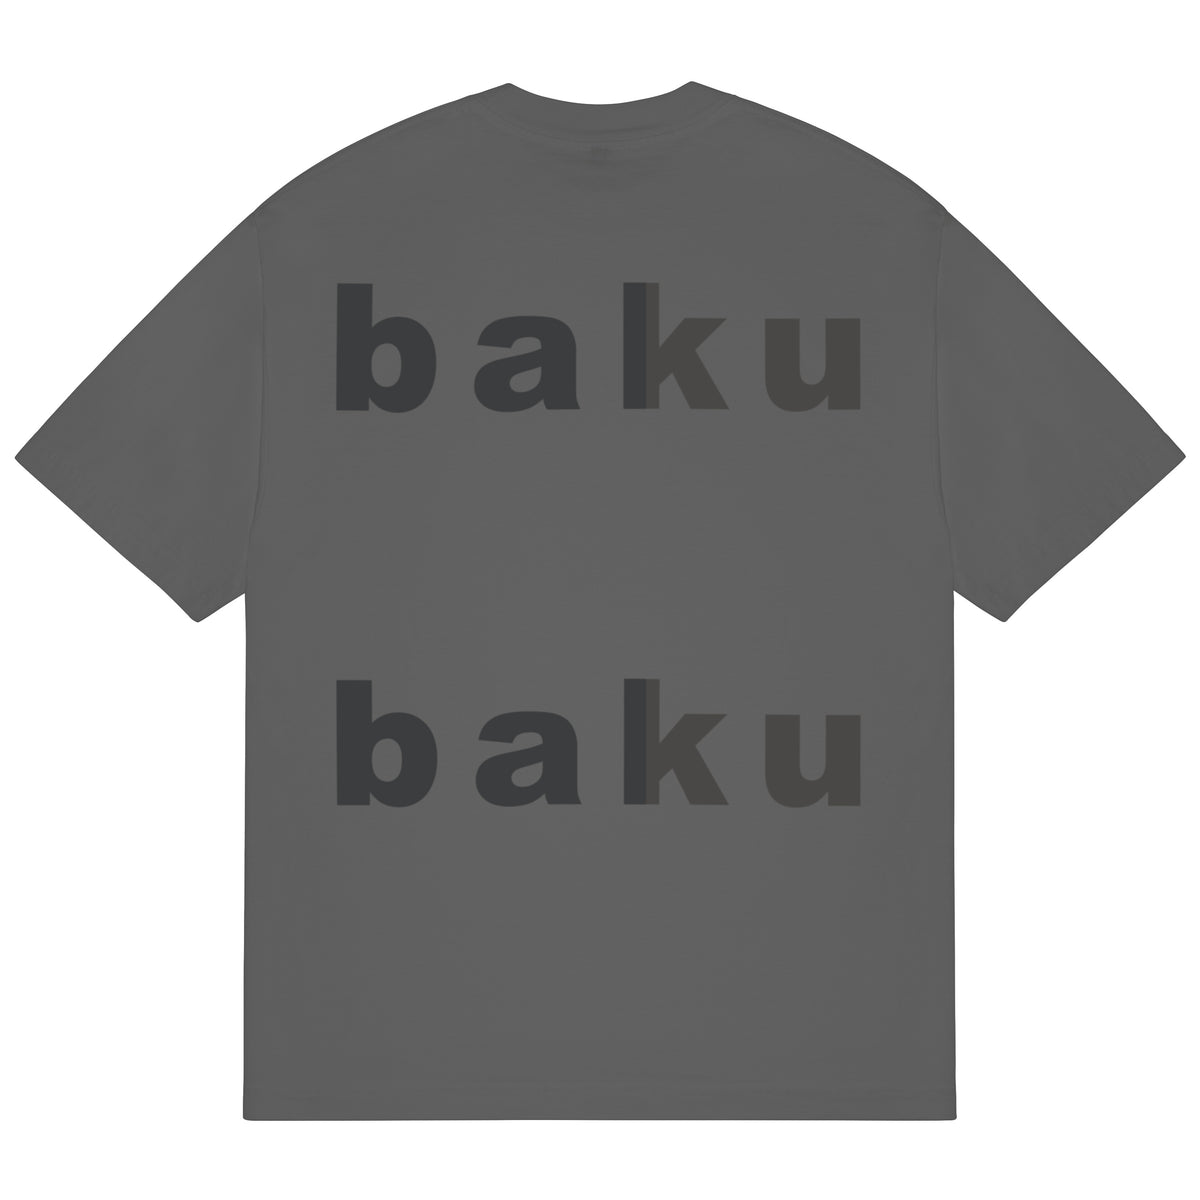 baku-baku T-Shirt (Charcoal)